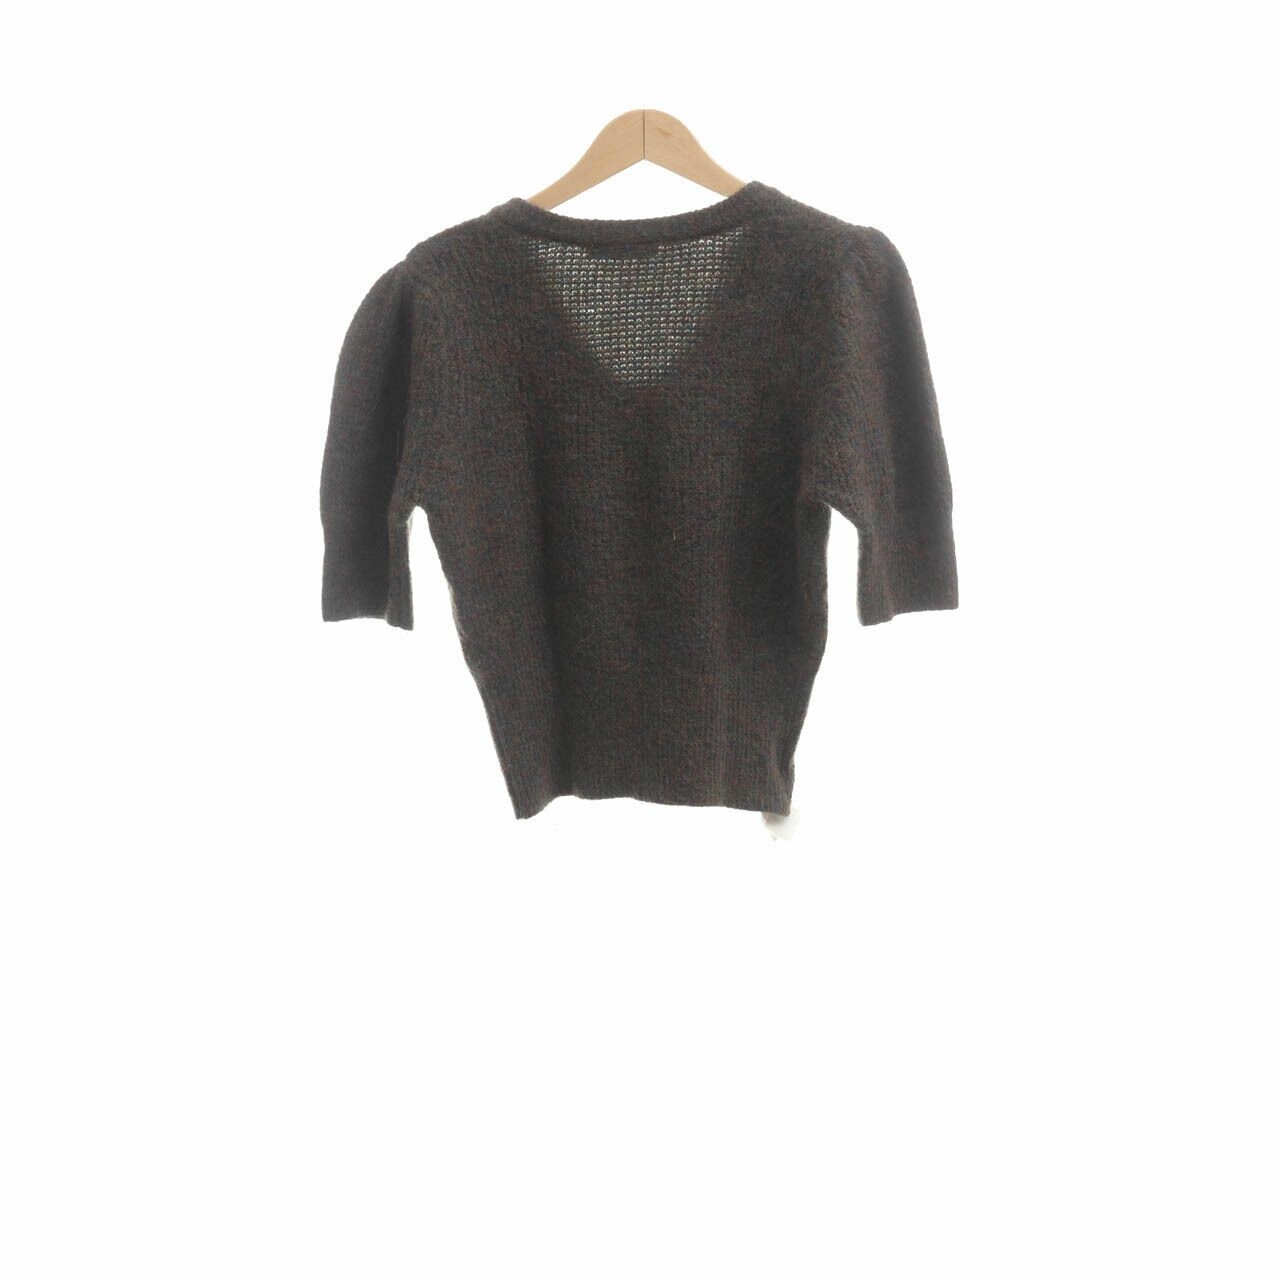 Zara Green Knit Sweater